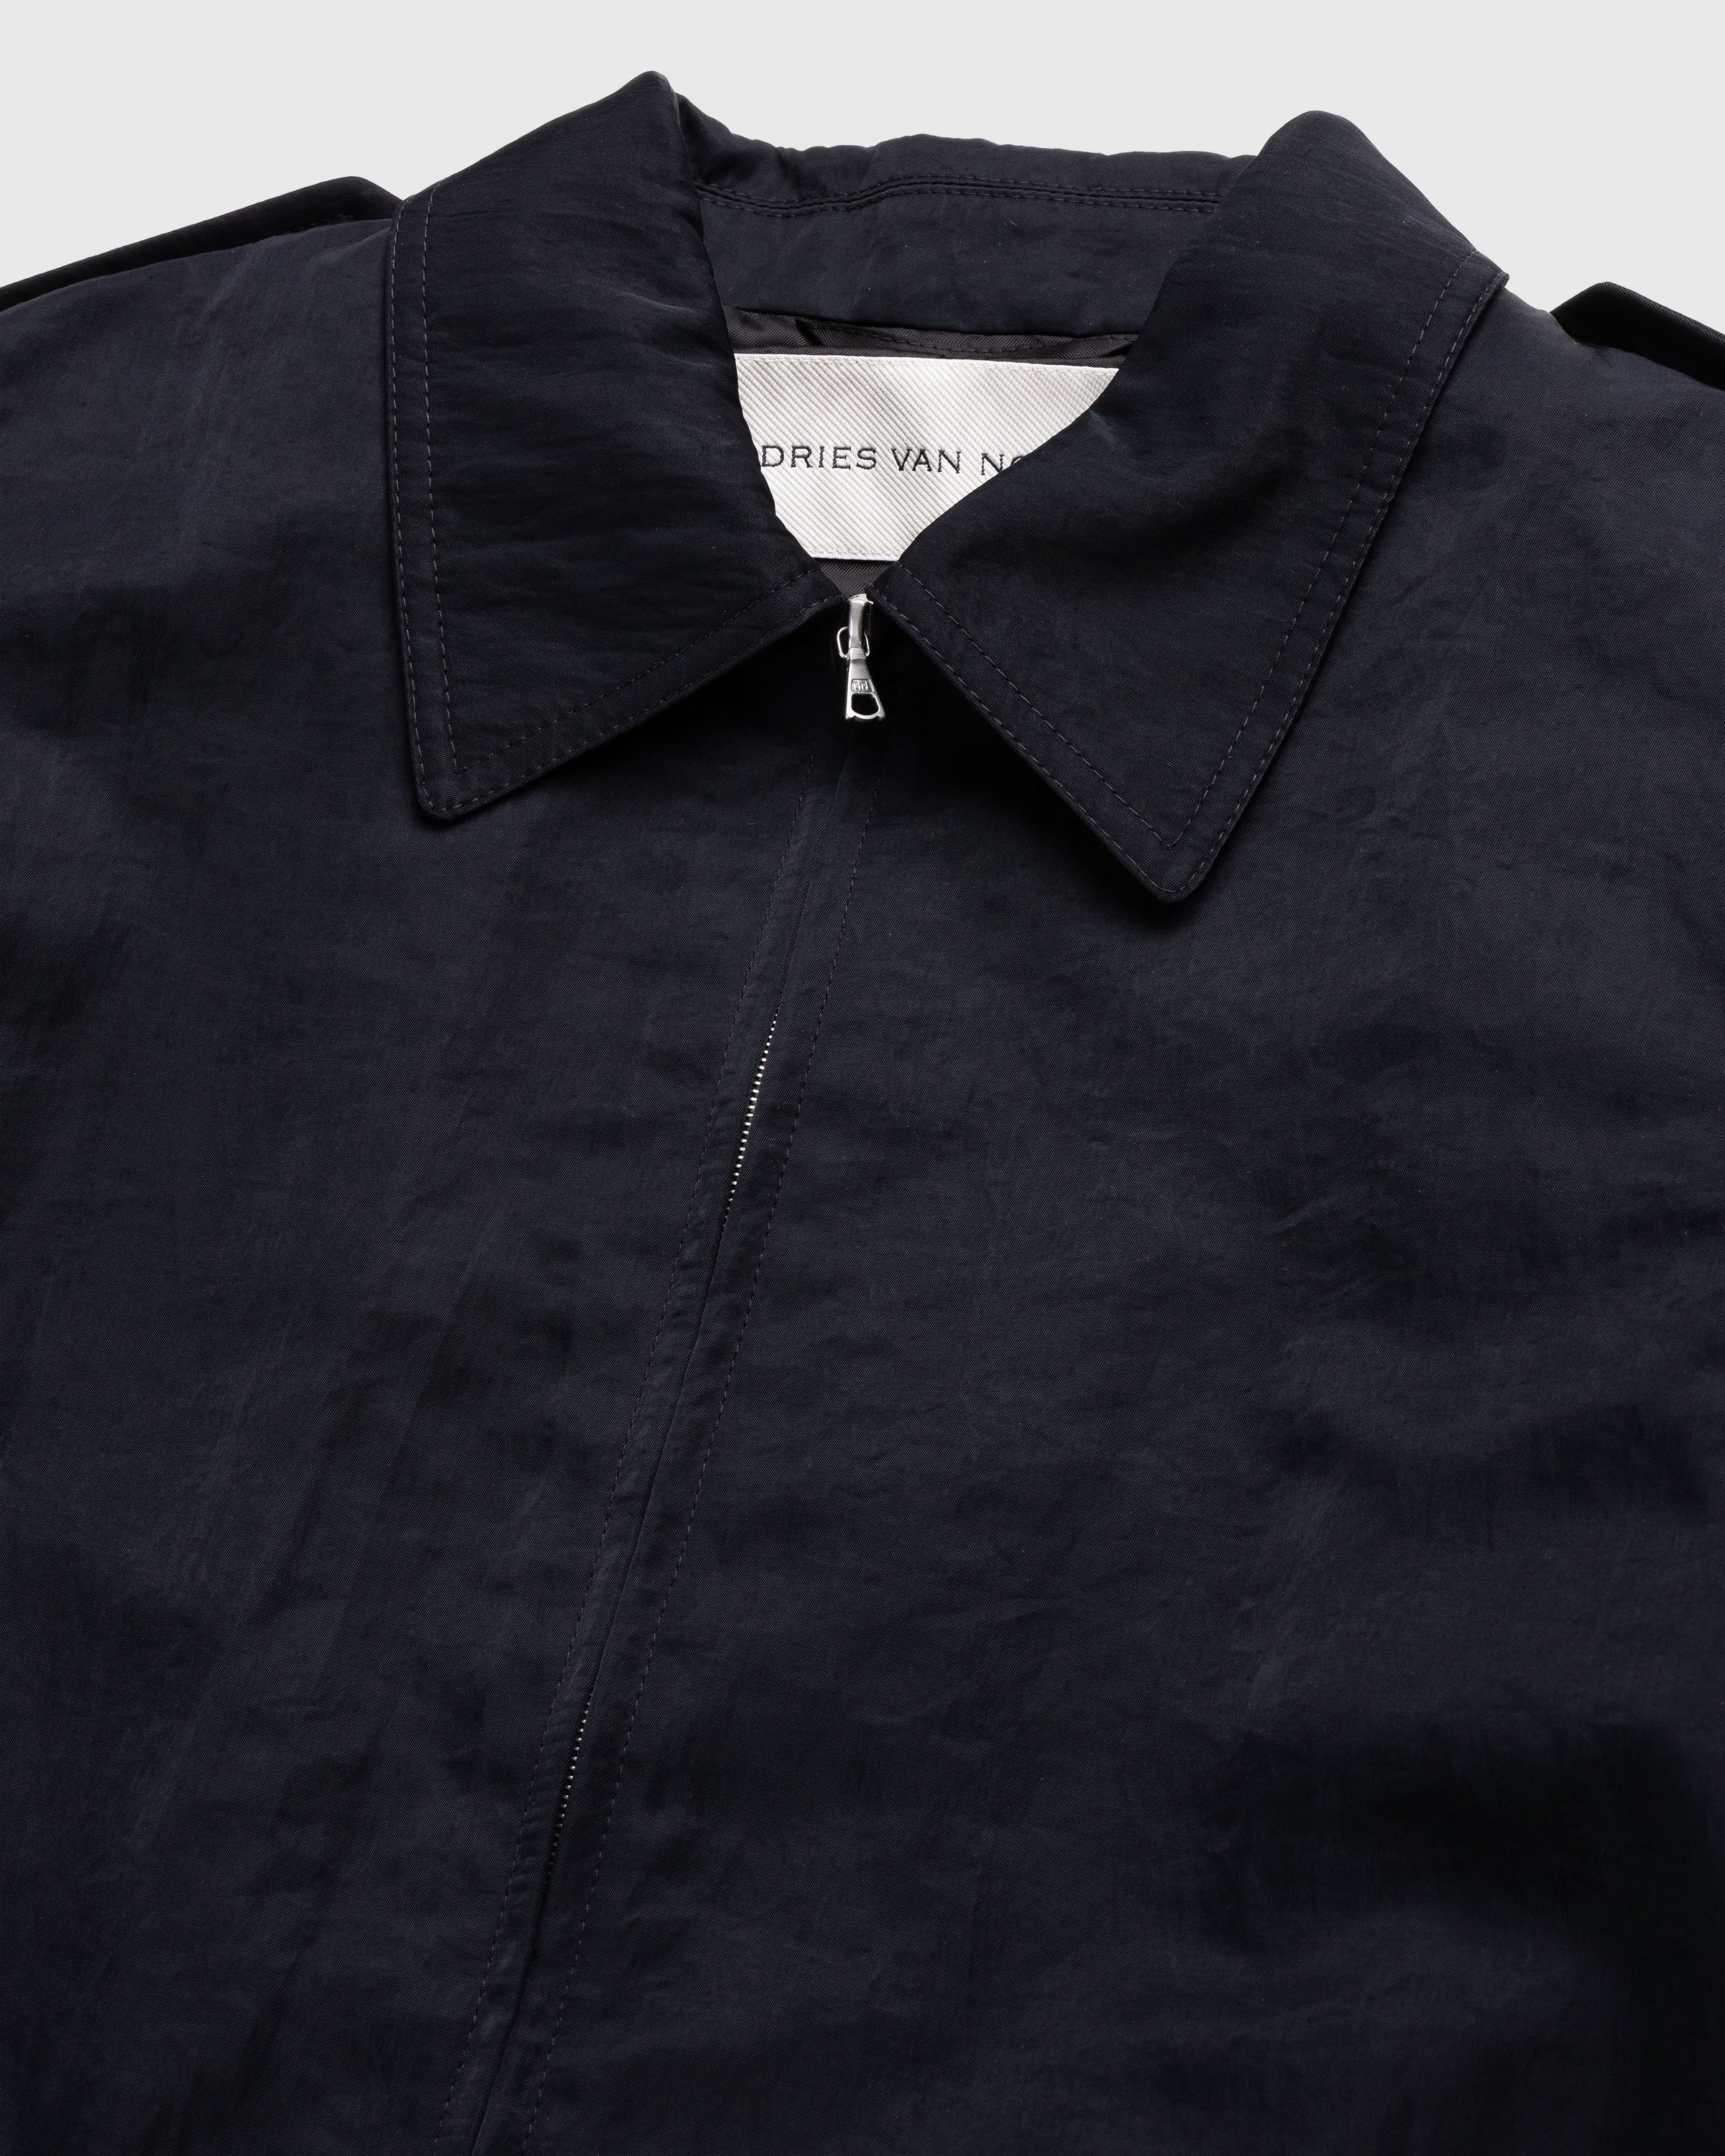 Dries van Noten - Vallow Jacket Black - Clothing - Black - Image 5